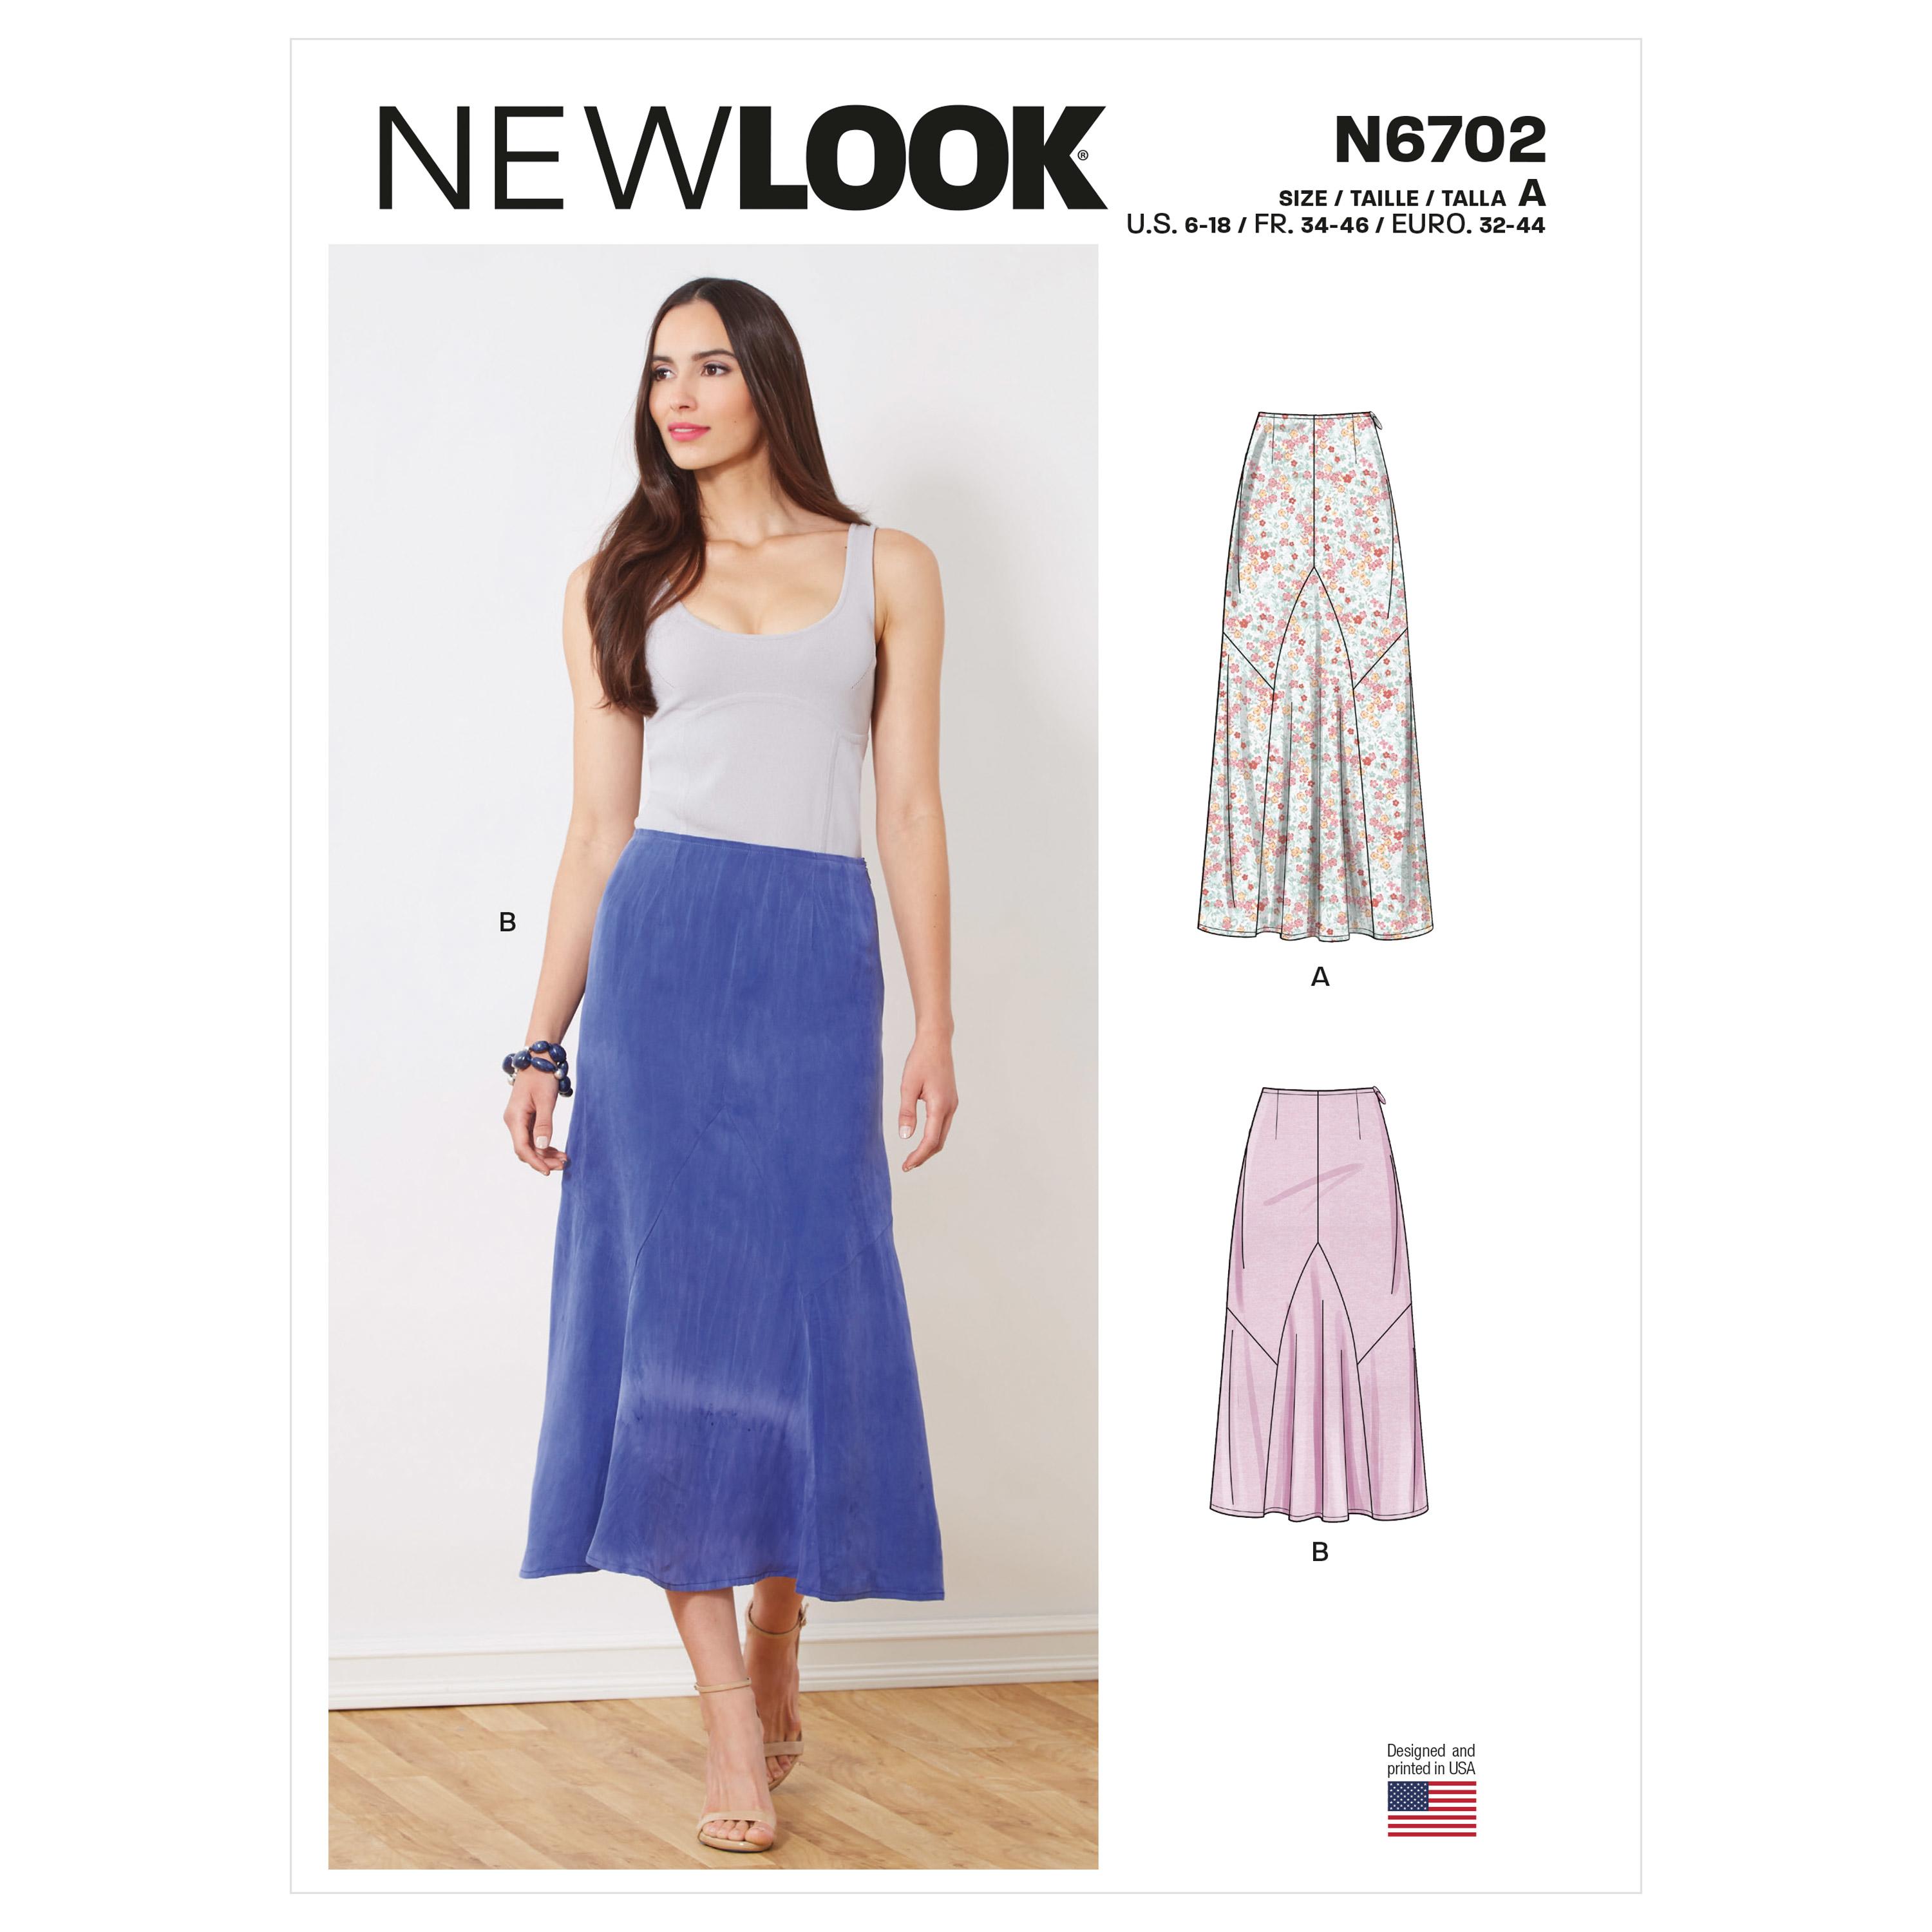 New Look Sewing Pattern N6702 Misses' Skirts